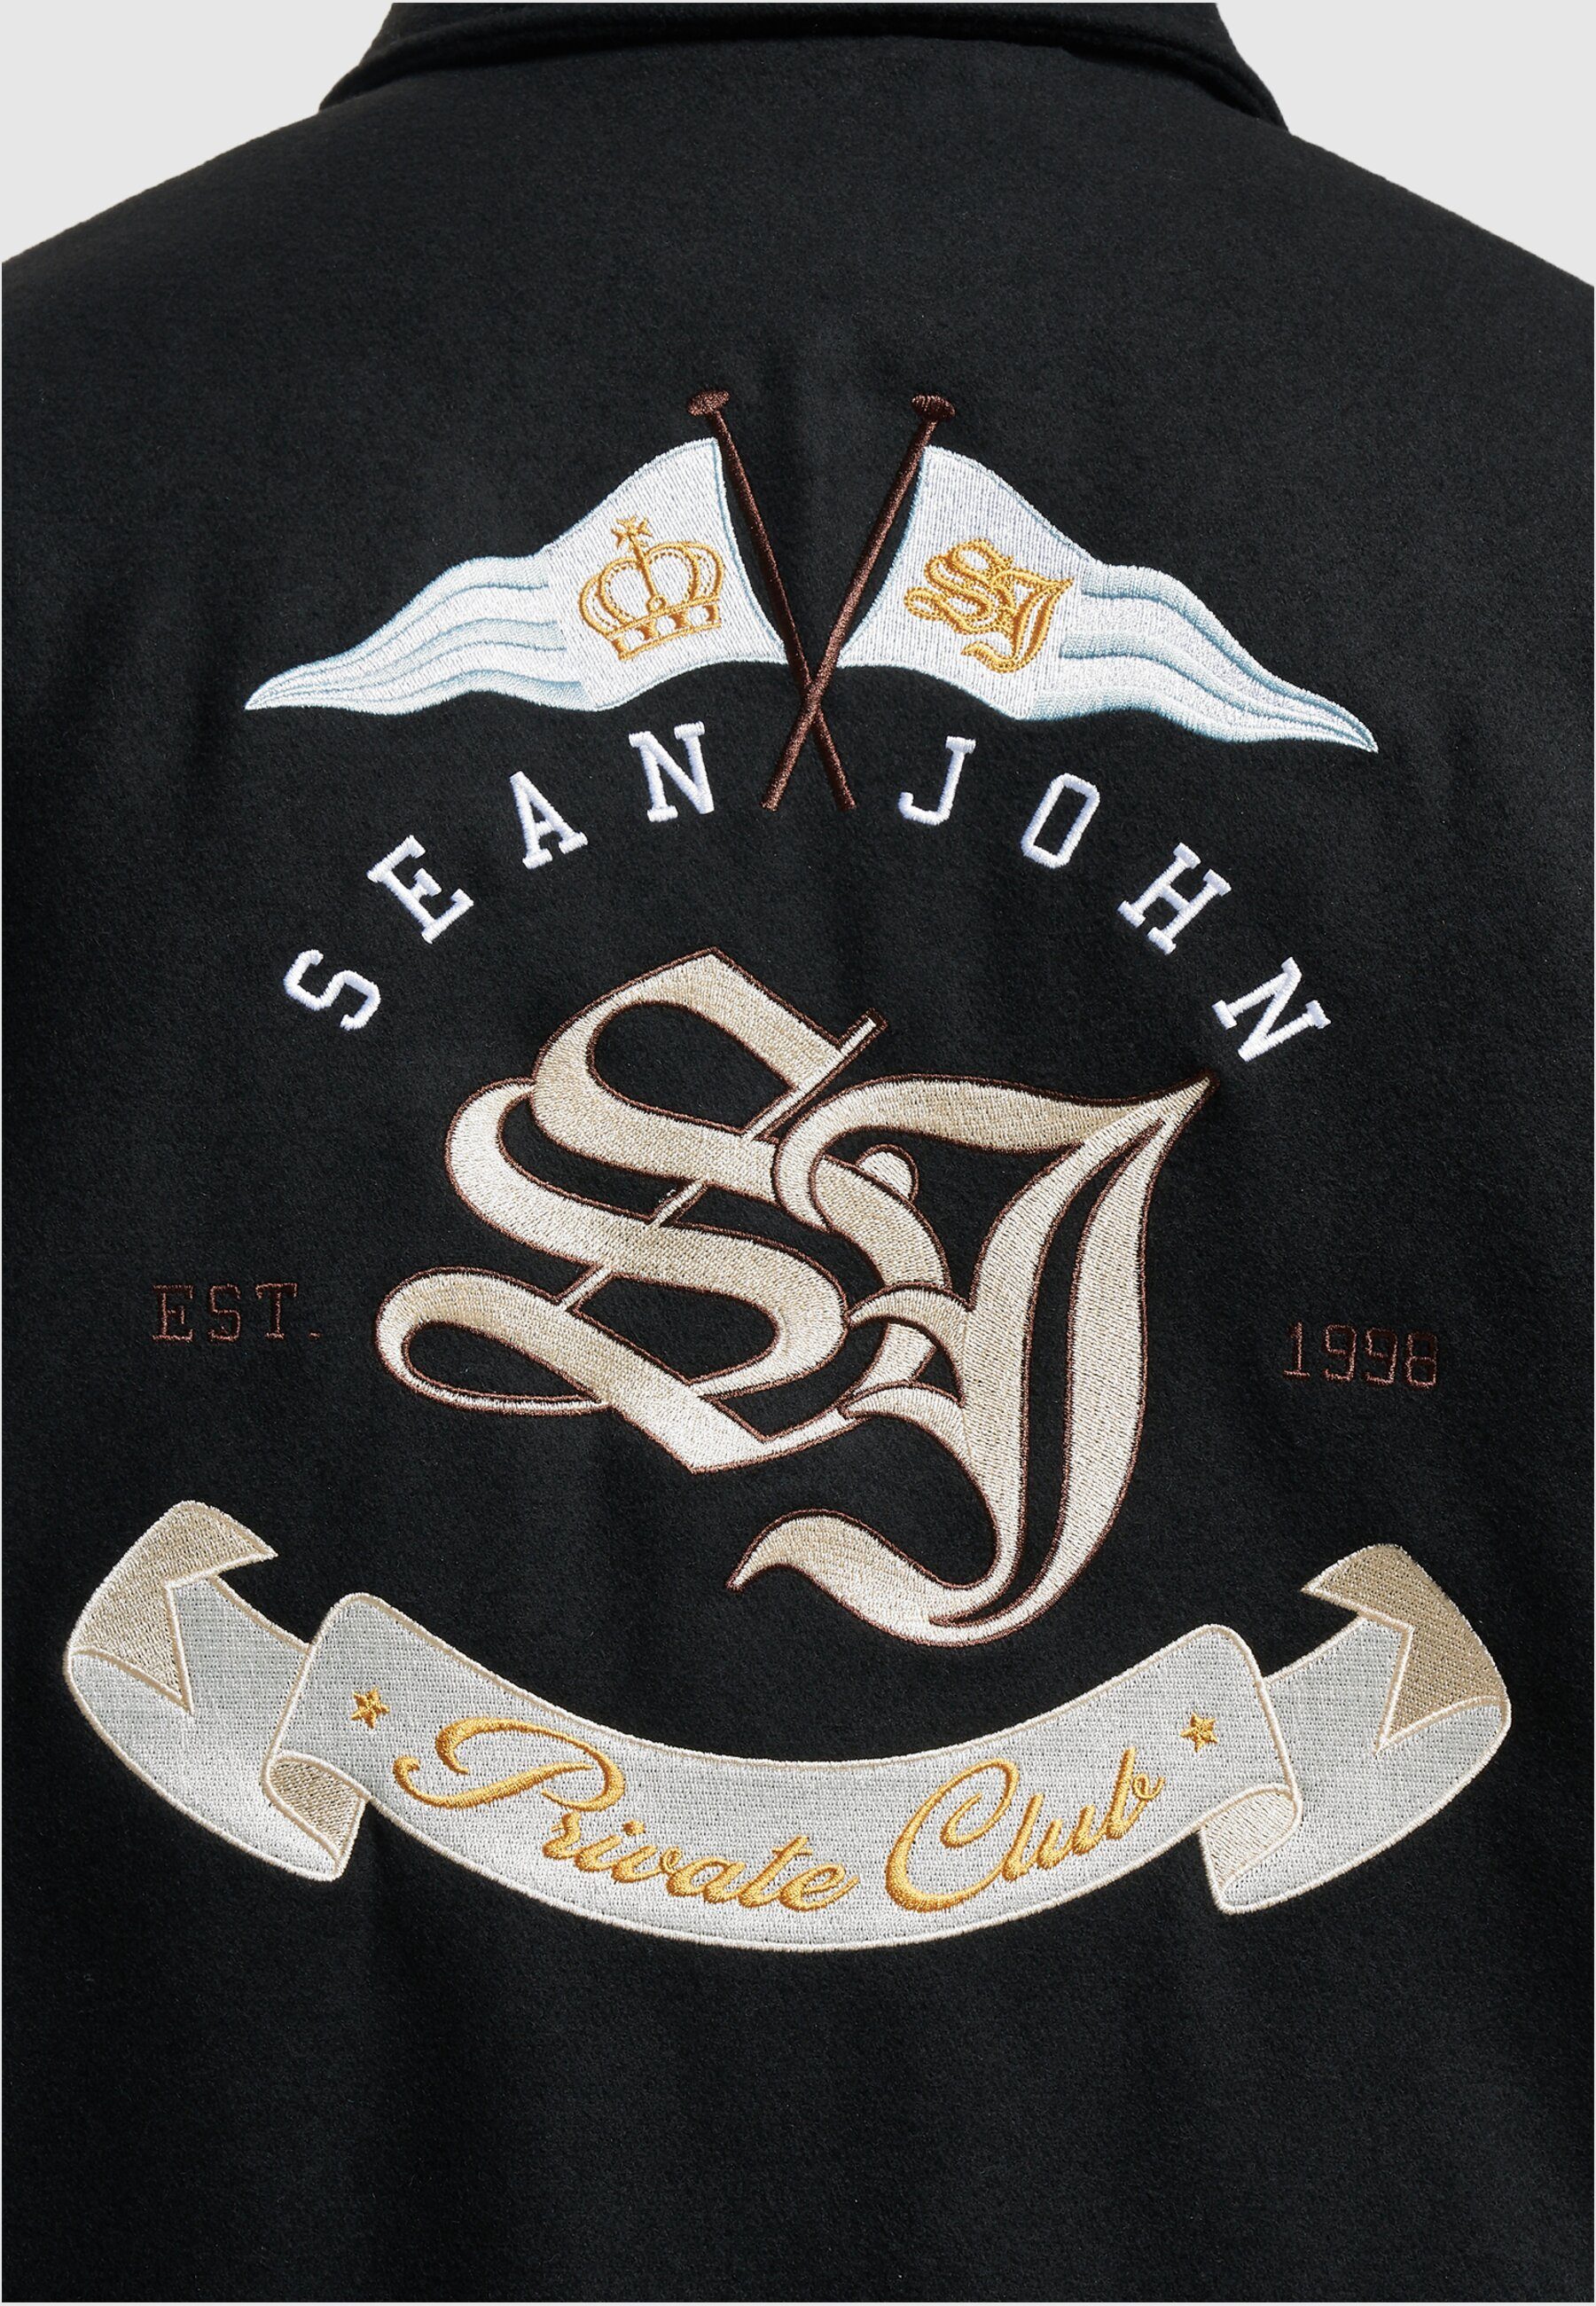 Sean John Outdoorjacke Herren JM232-016-02 Yacht Collegejacket (1-St) SJ Club